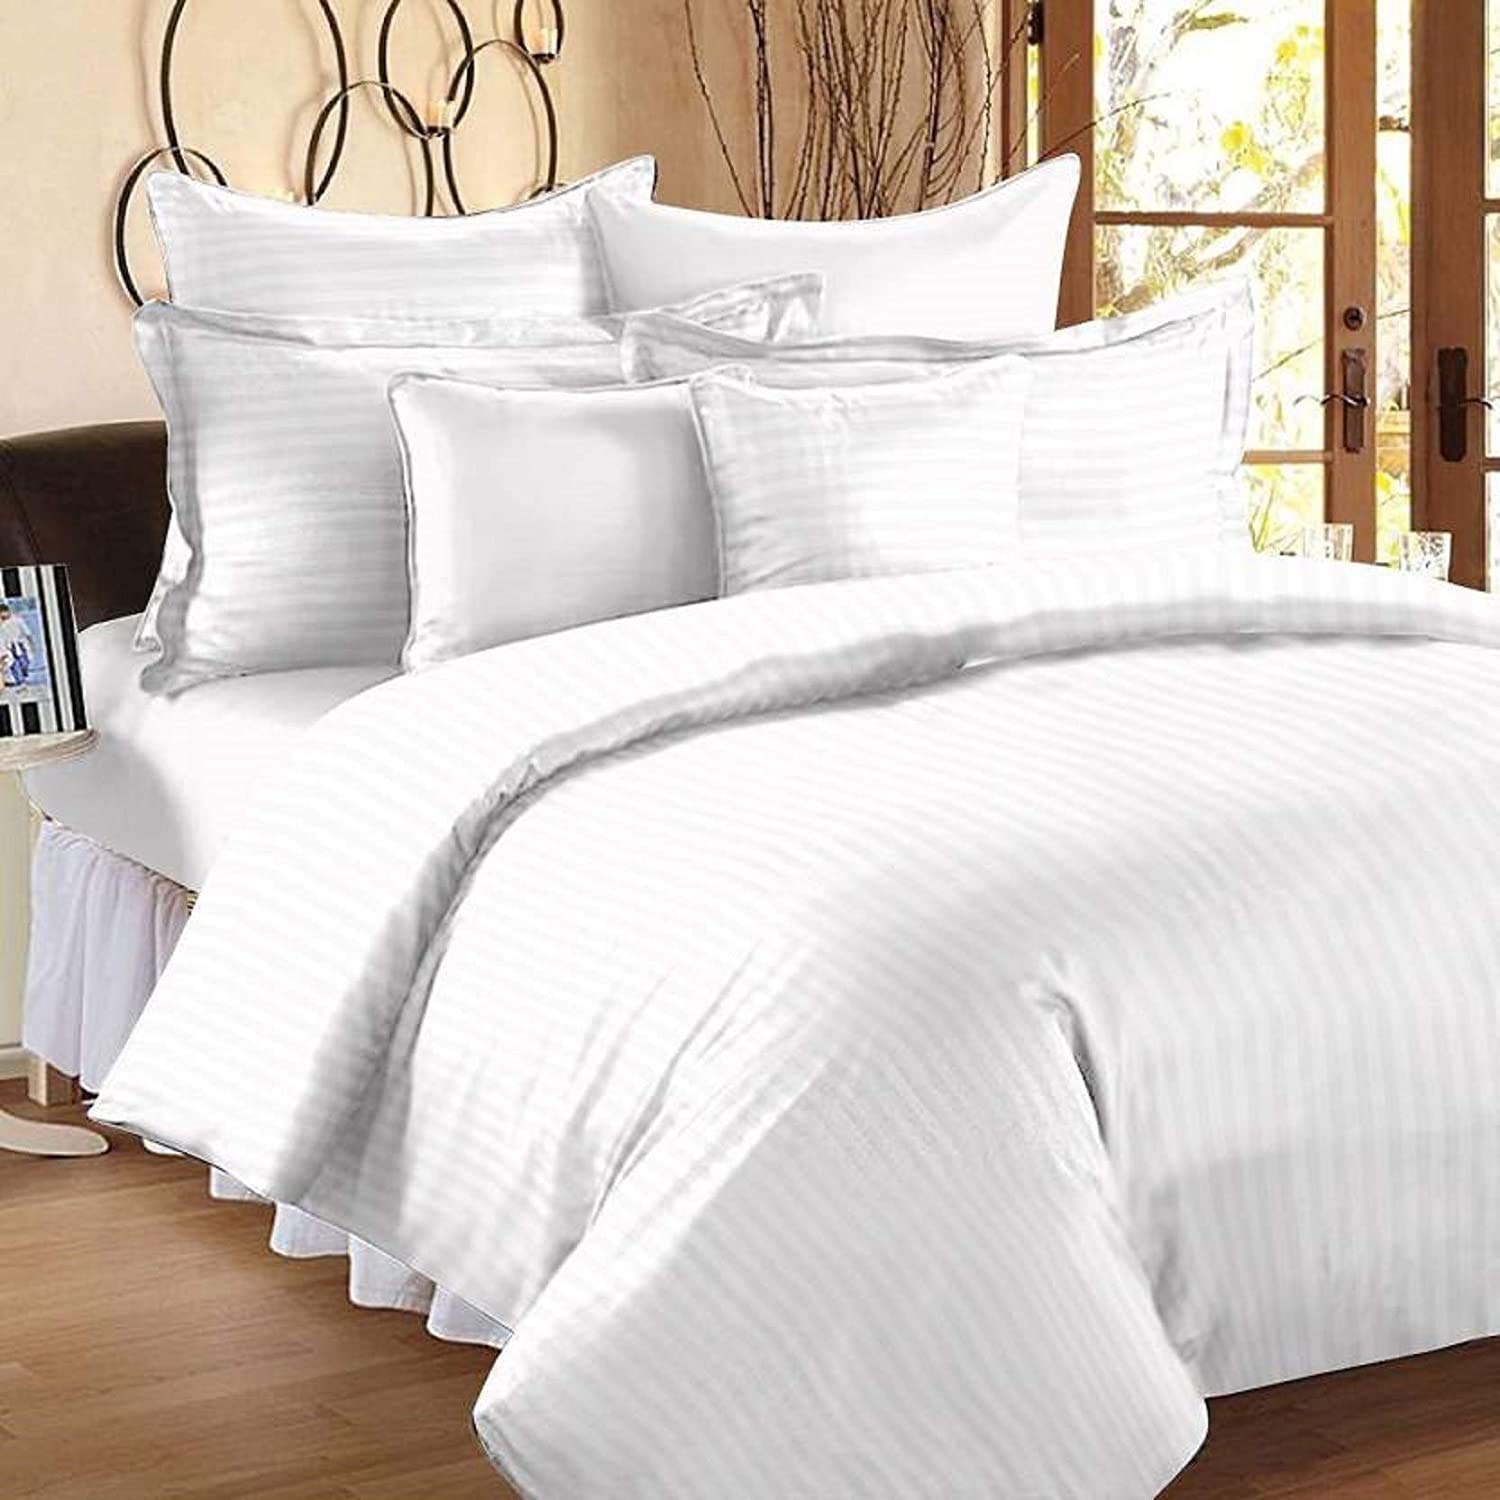 white plain striped cotton bedsheet